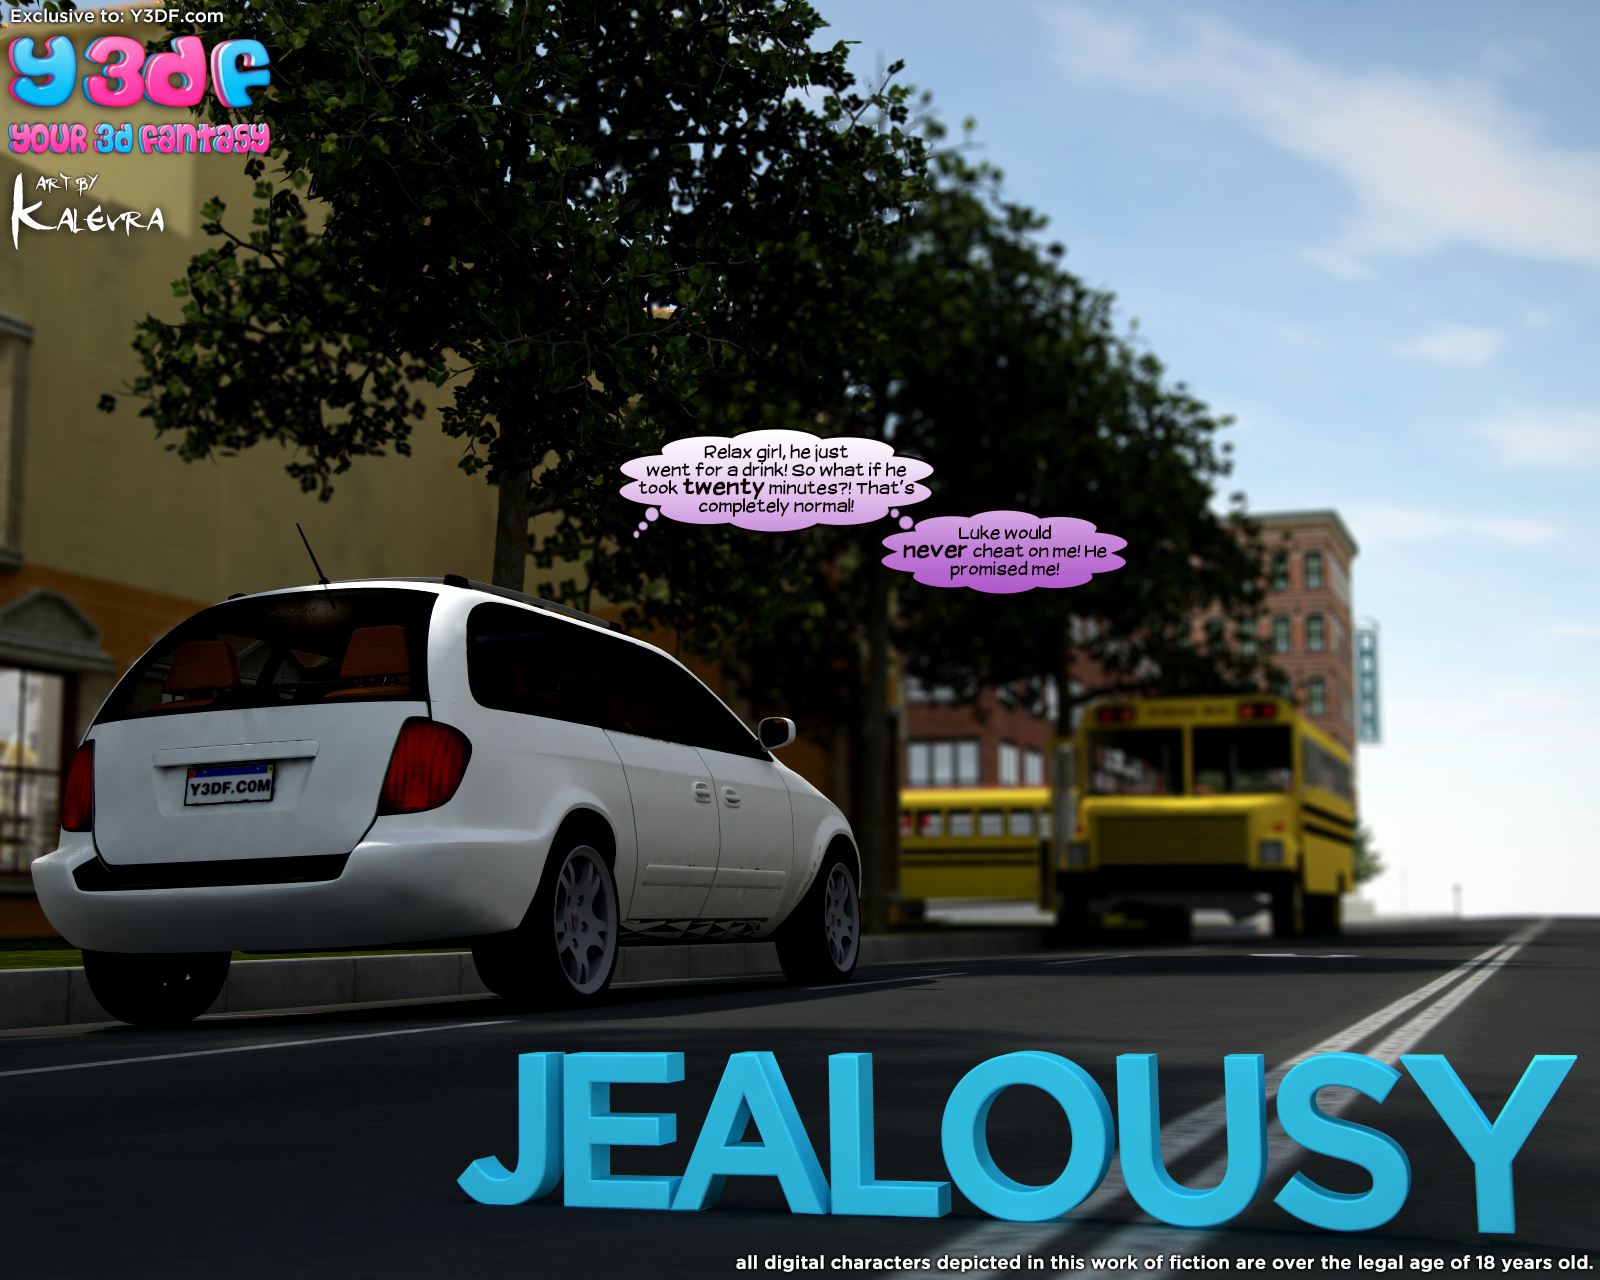 Y3DF – Jealousy Complete